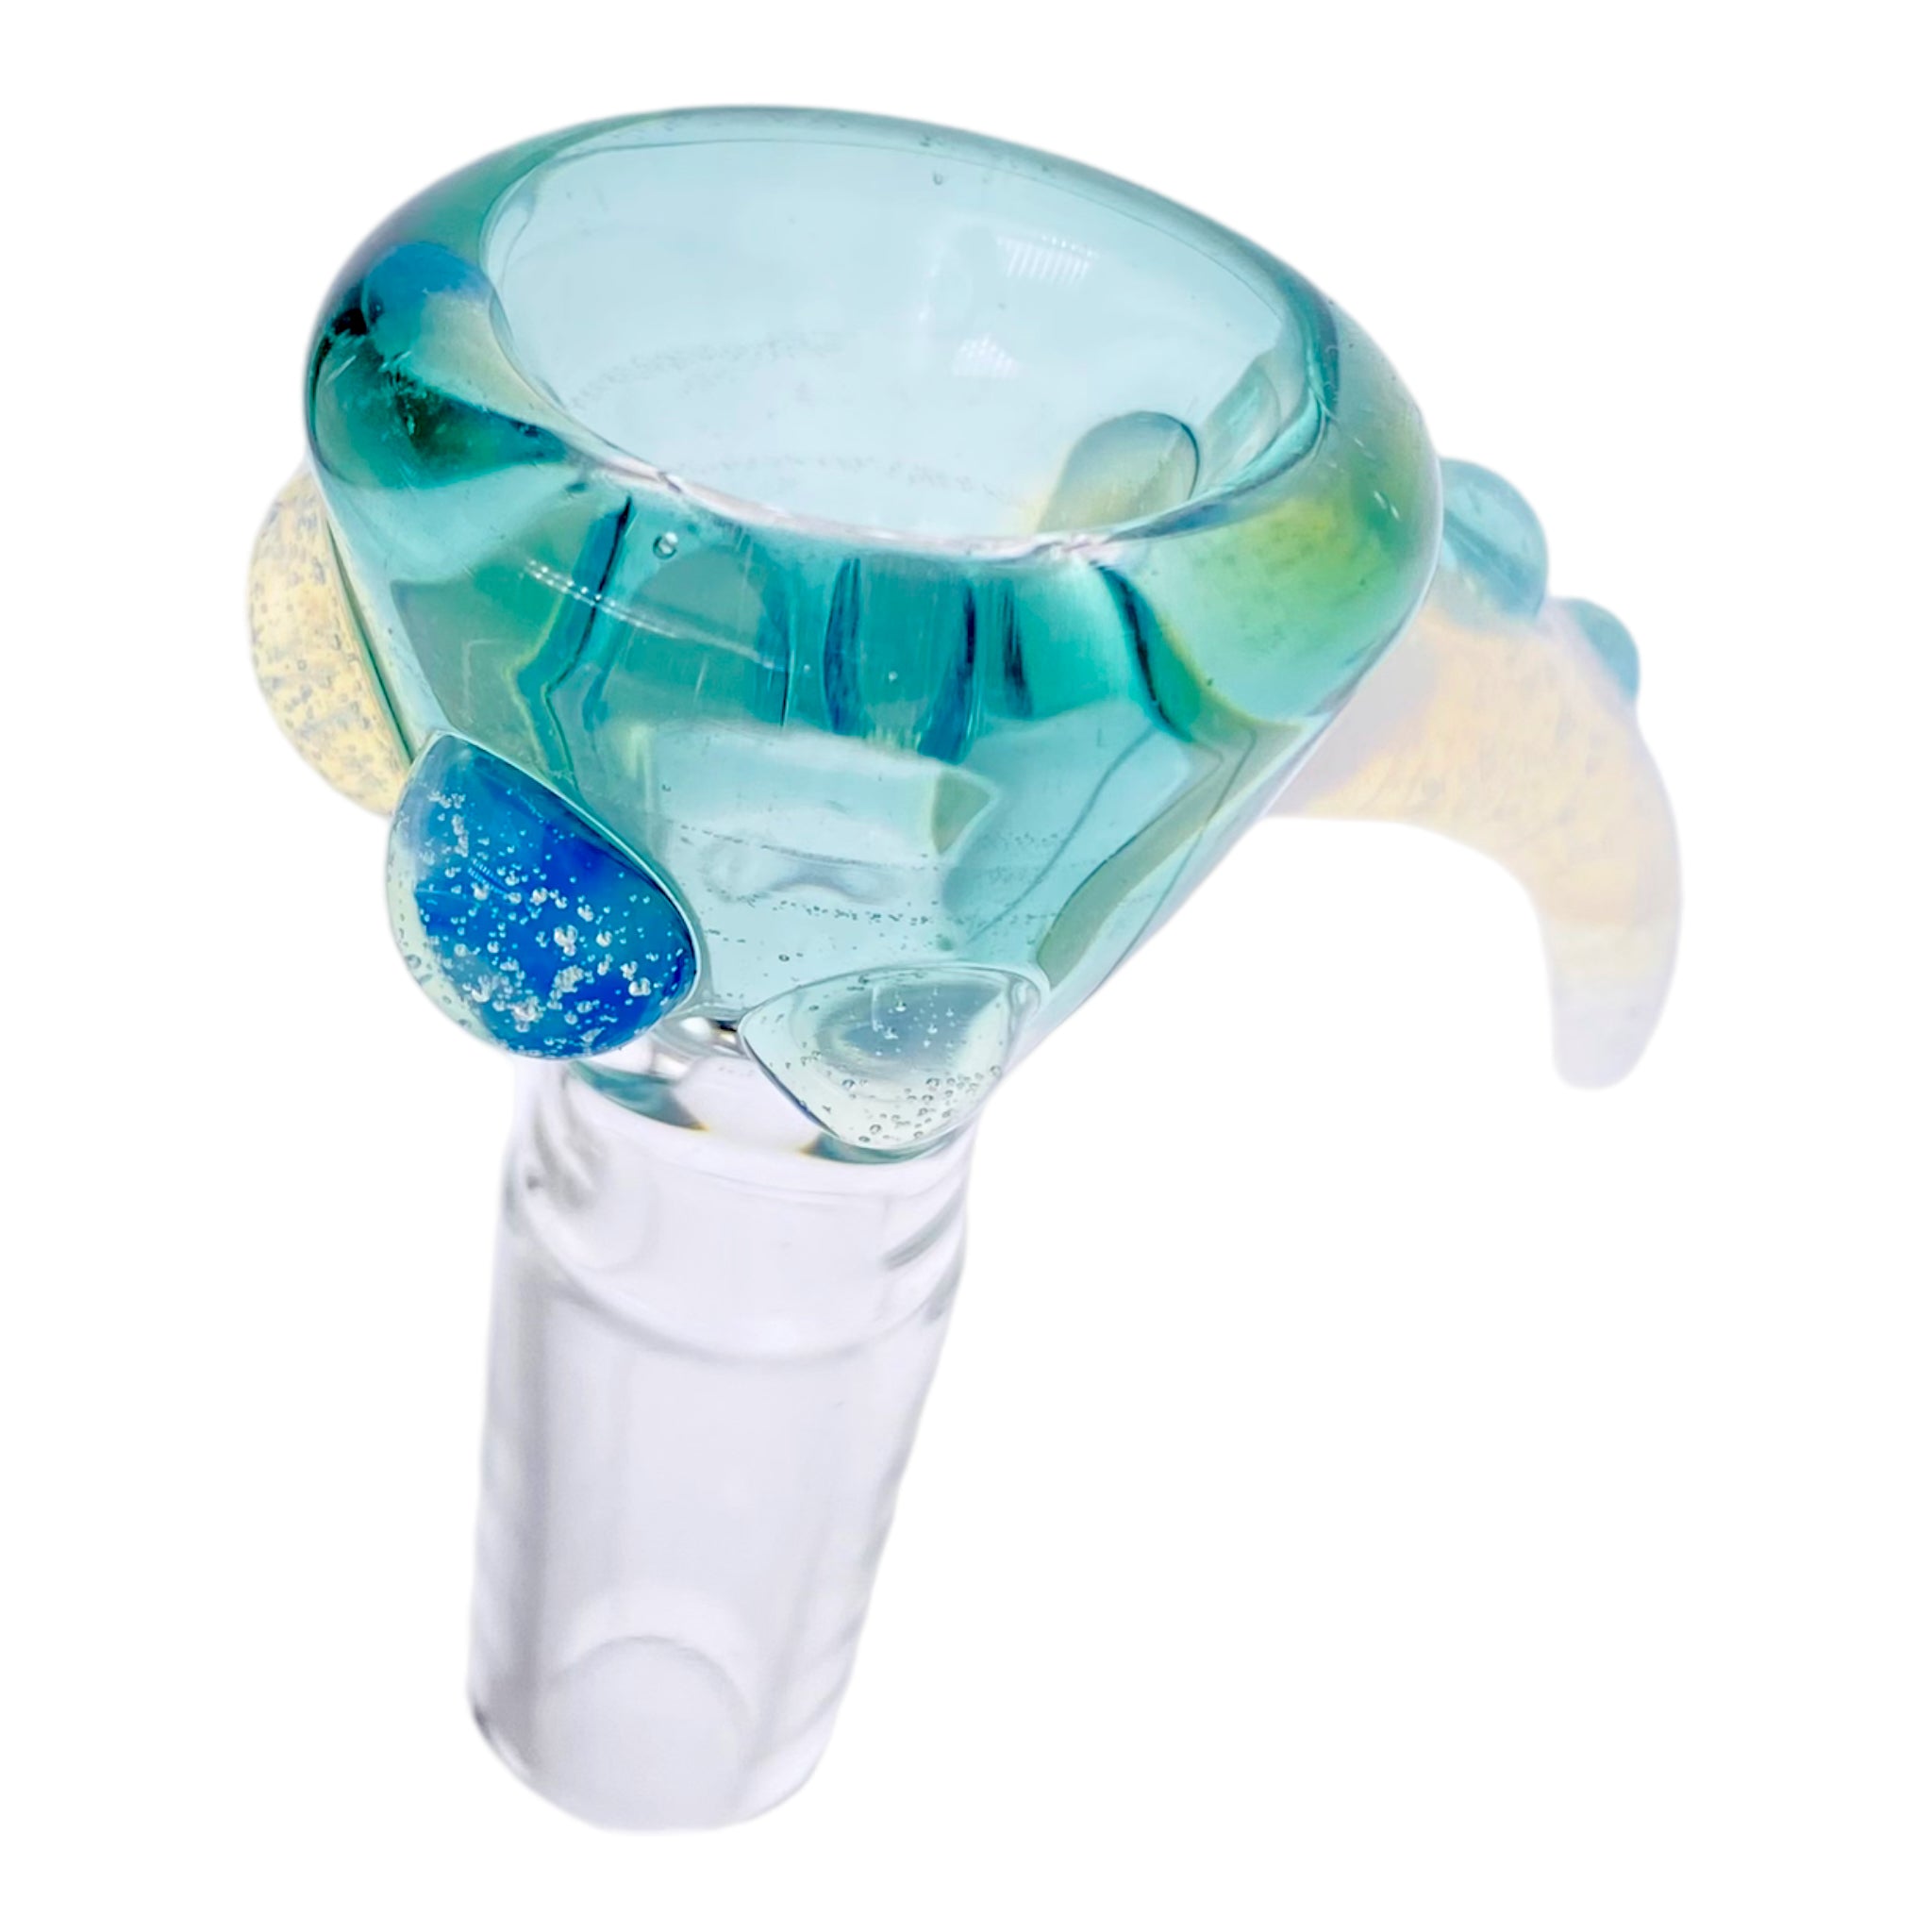 Arko Glass - 14mm Flower Bowl - Aqua Blue With Mystic Fume Handle